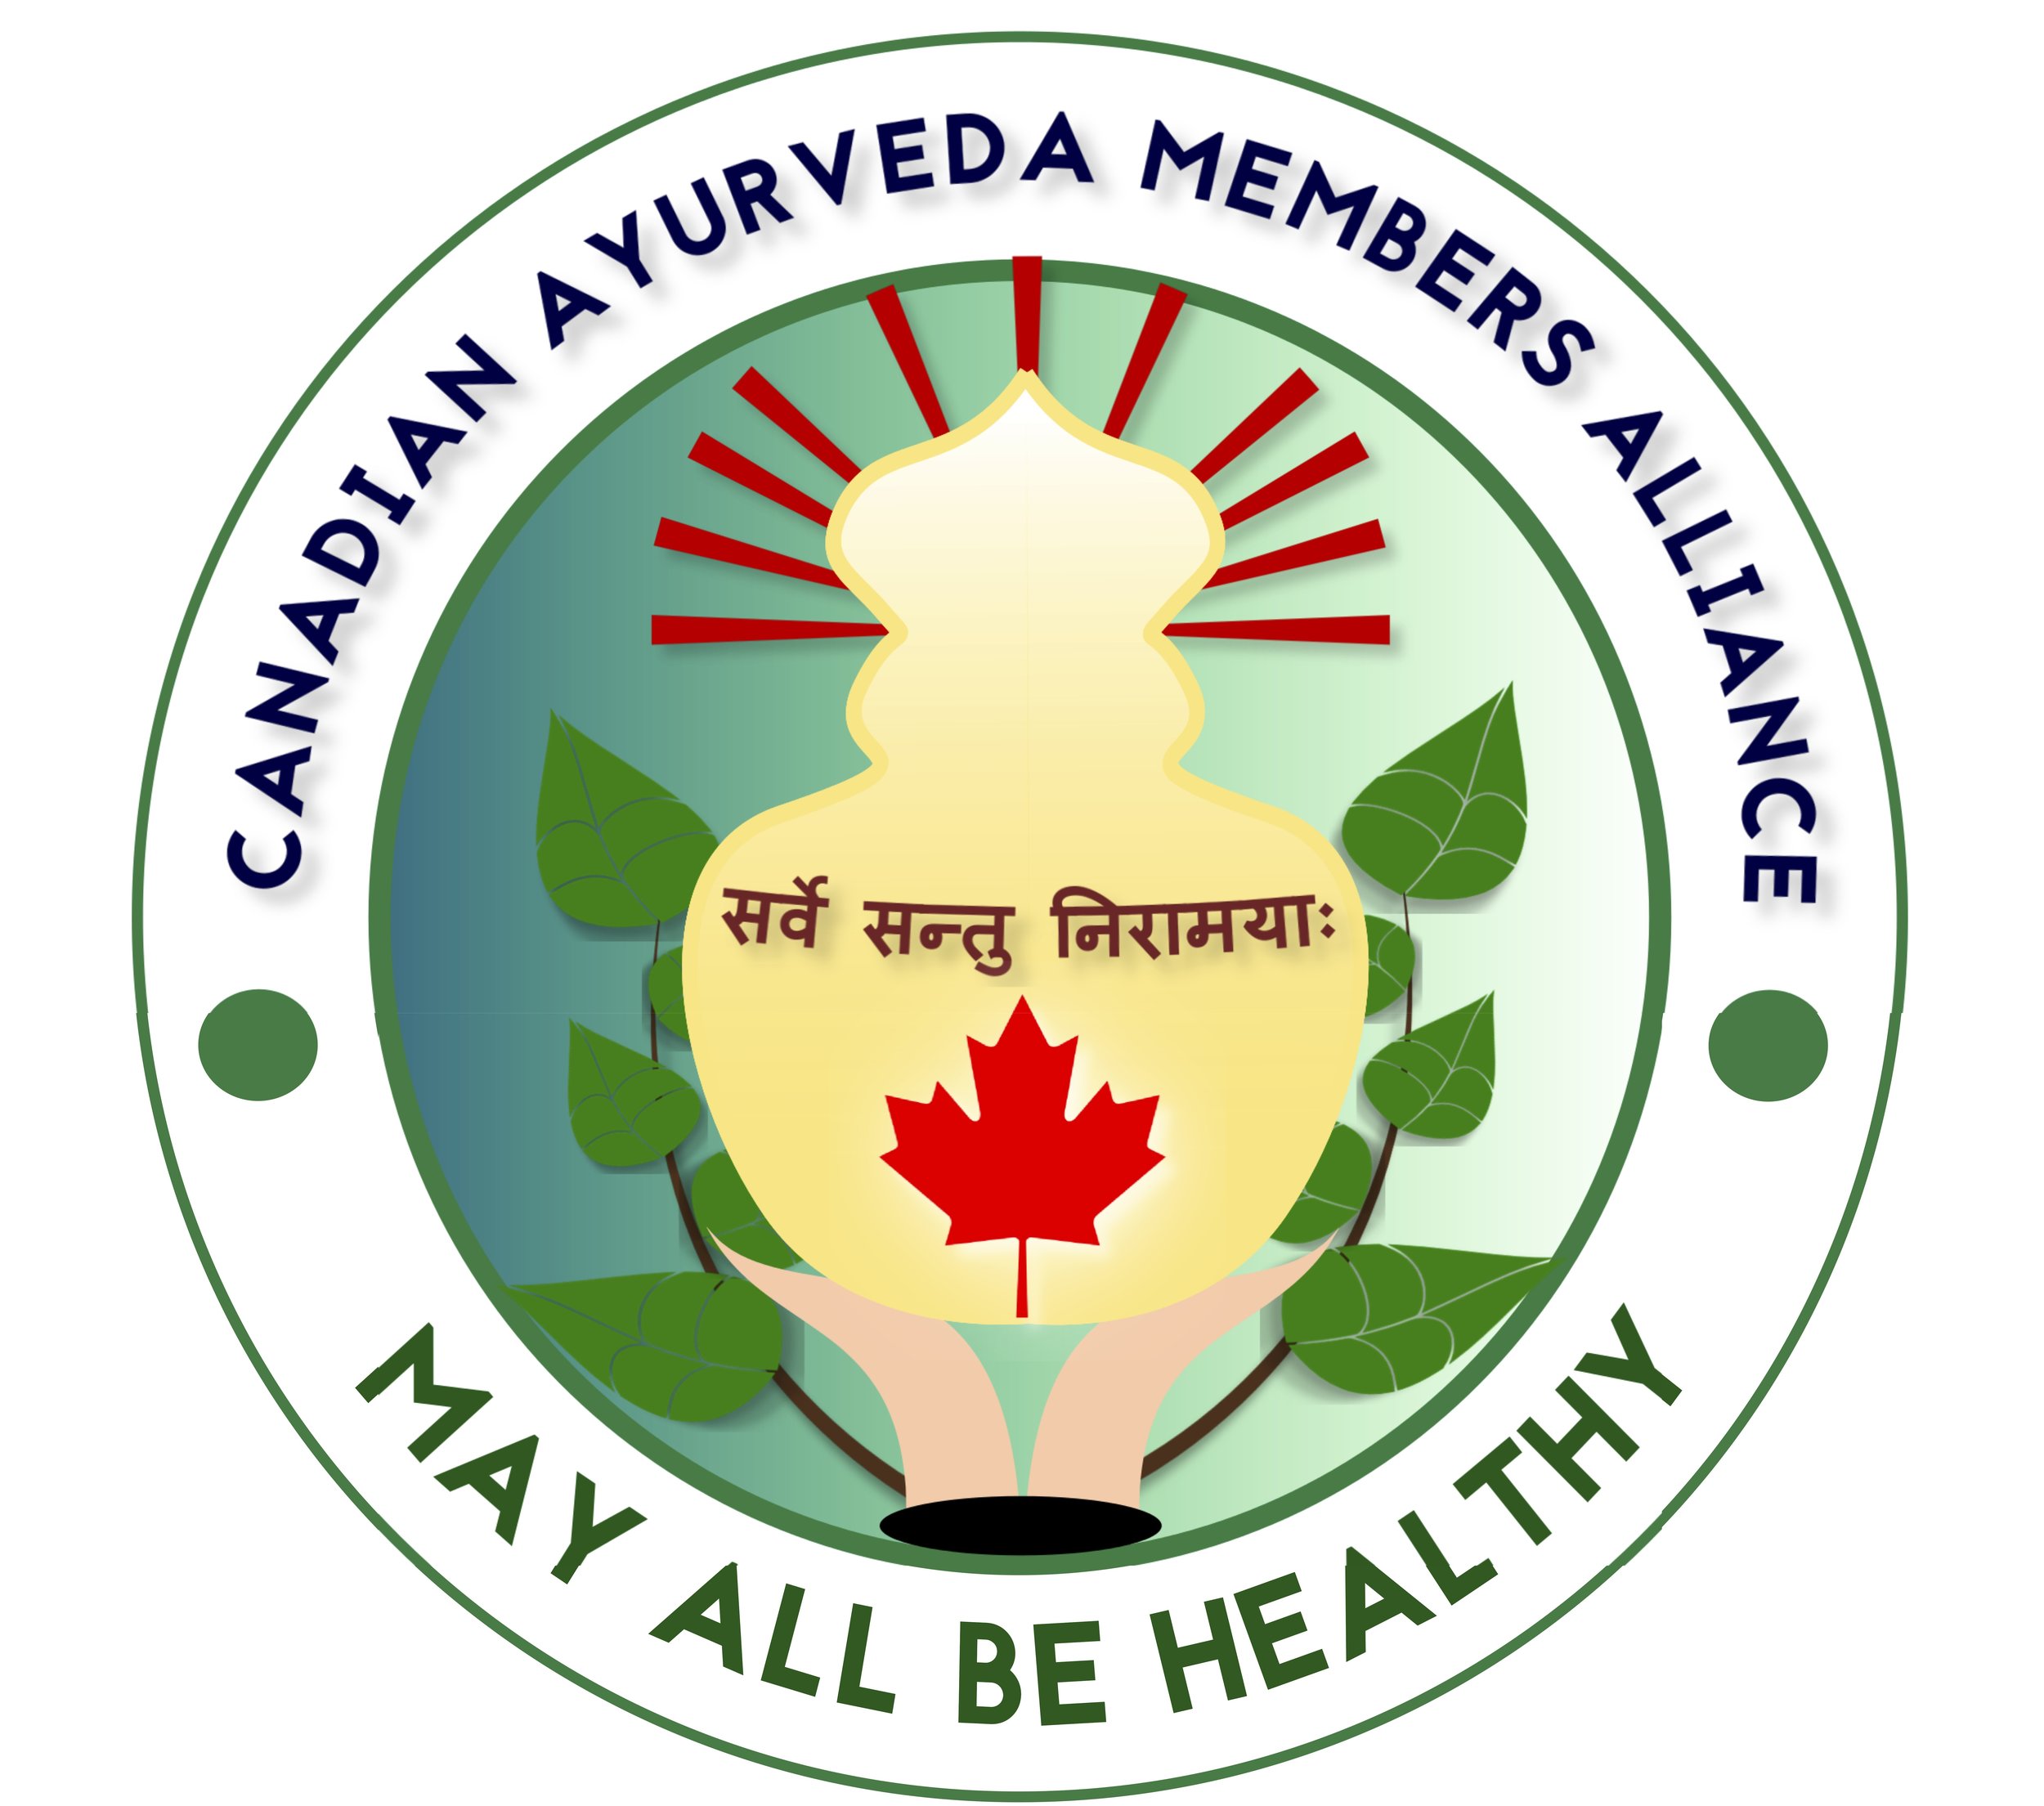 Canadian Ayurvedic Members Alliance